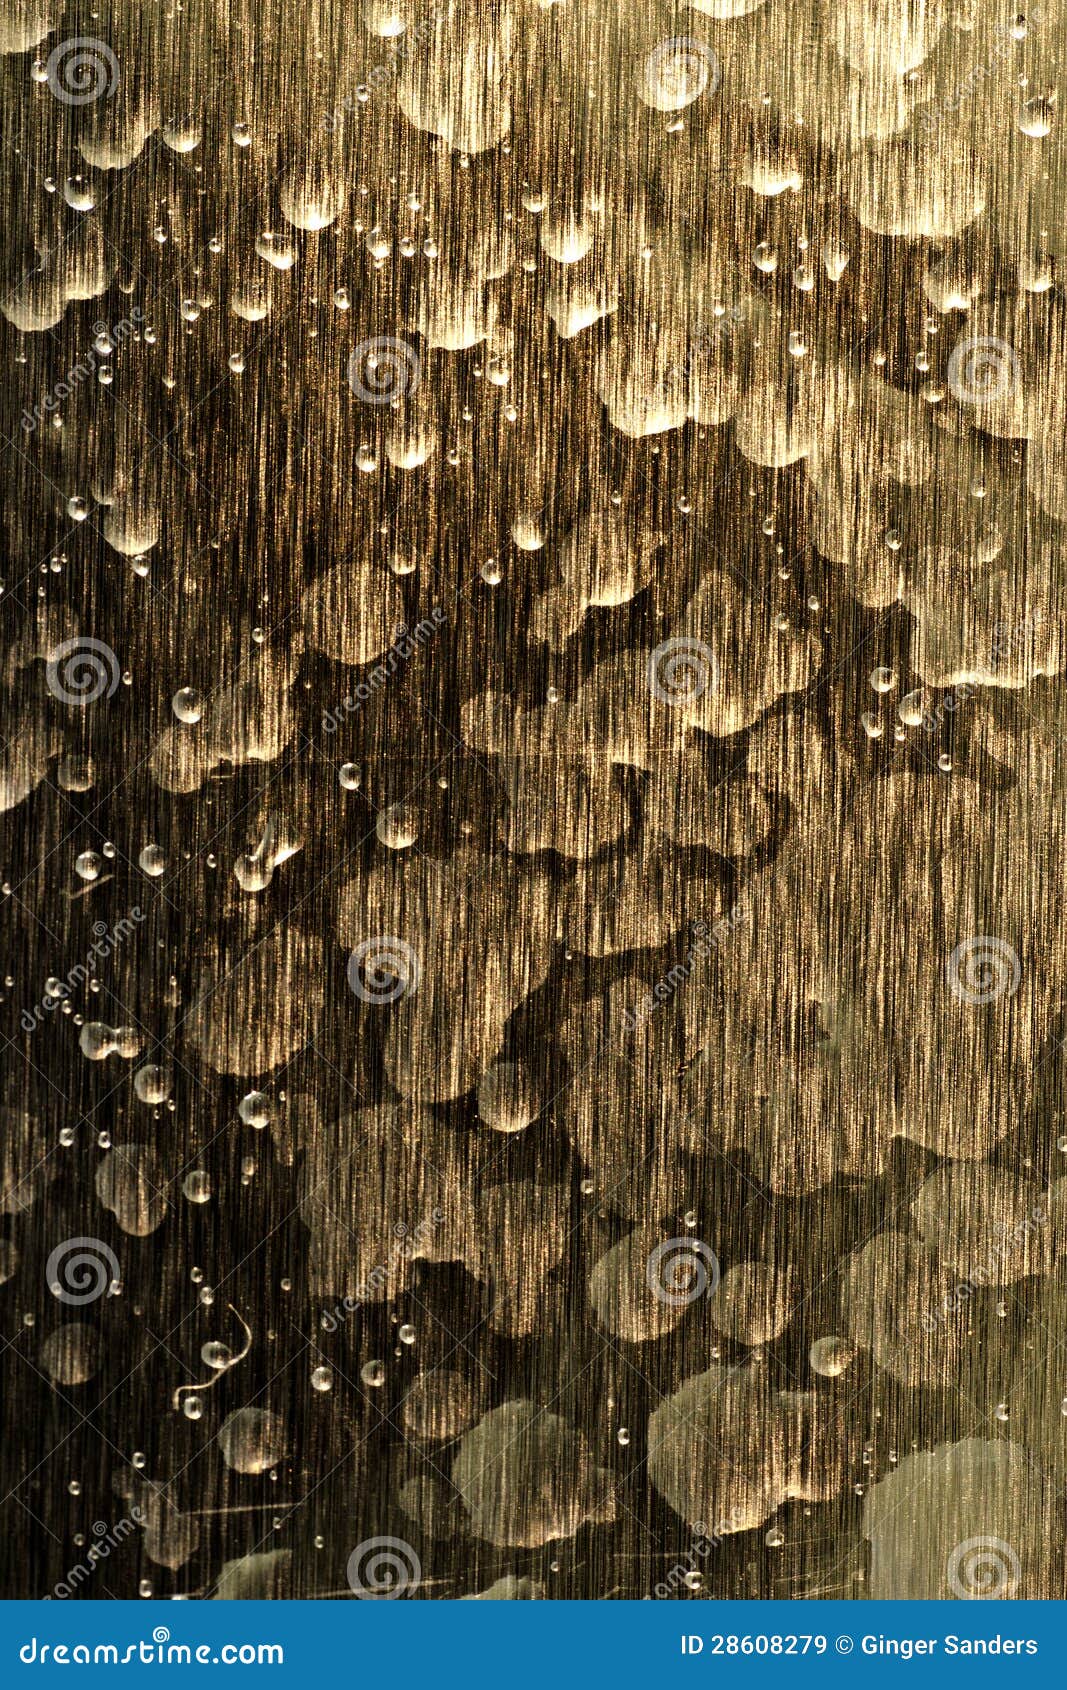 bronze streaked water pattern background